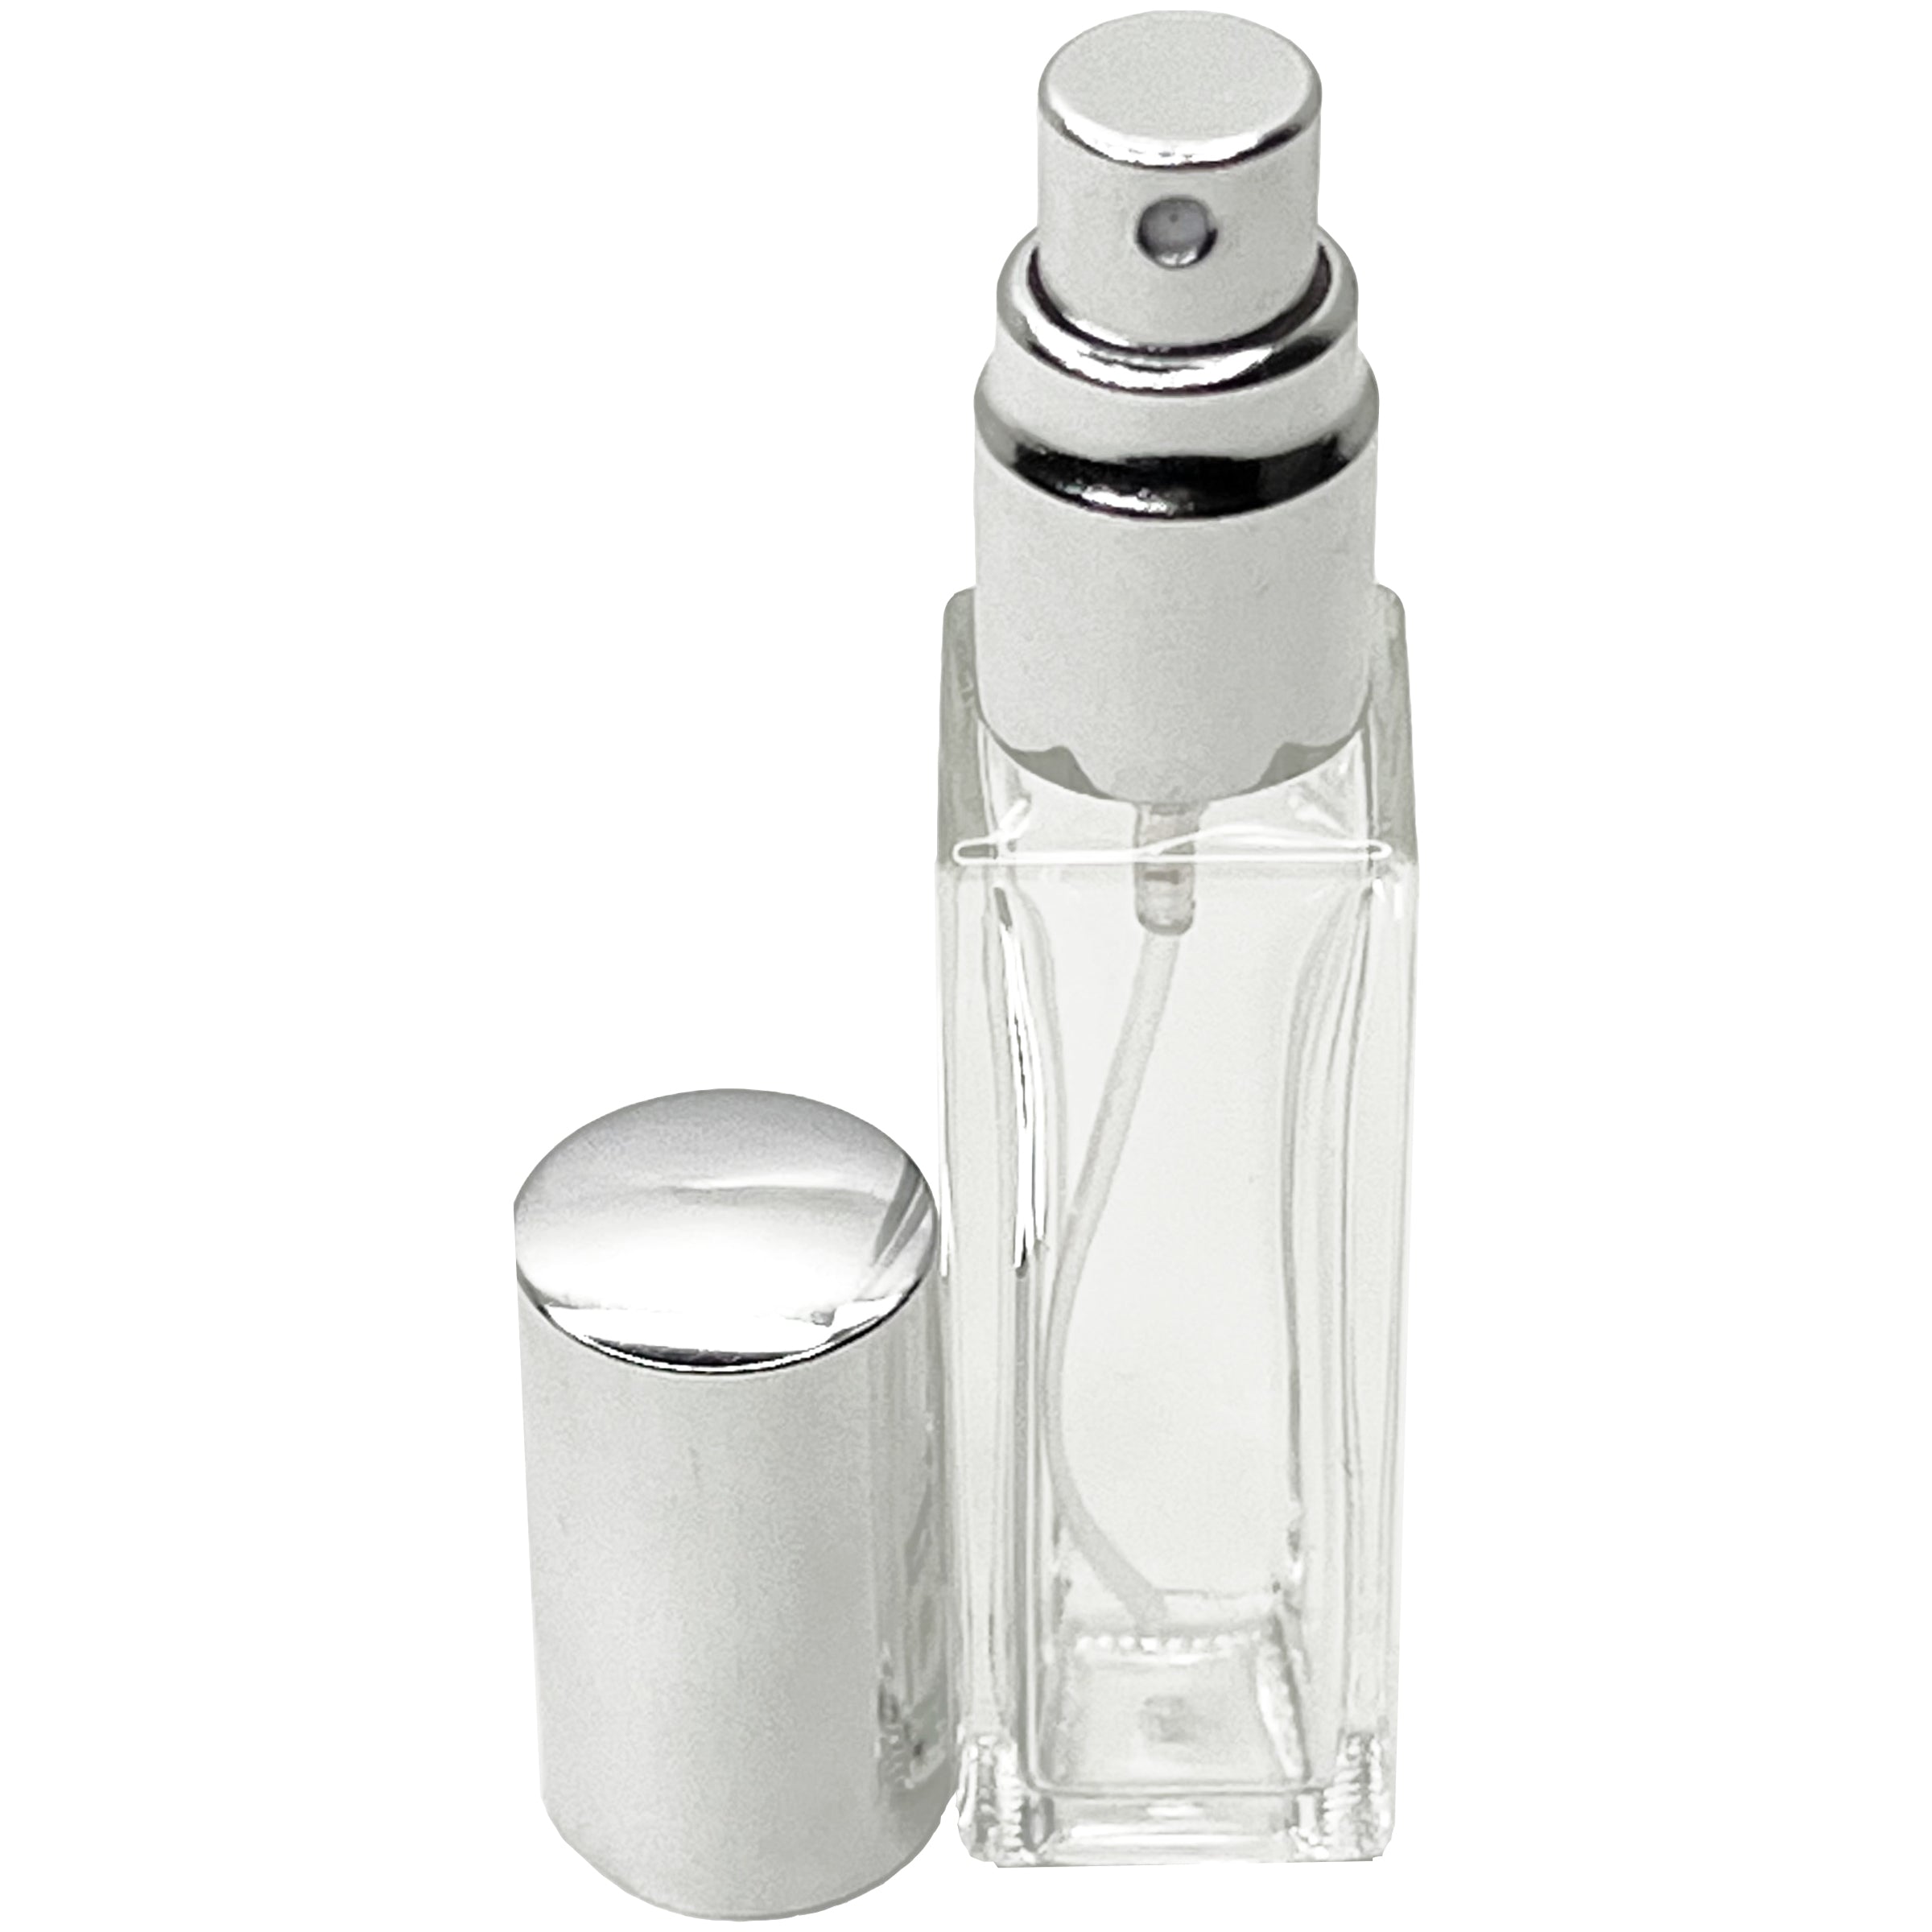 10ml perfume bottle in hand